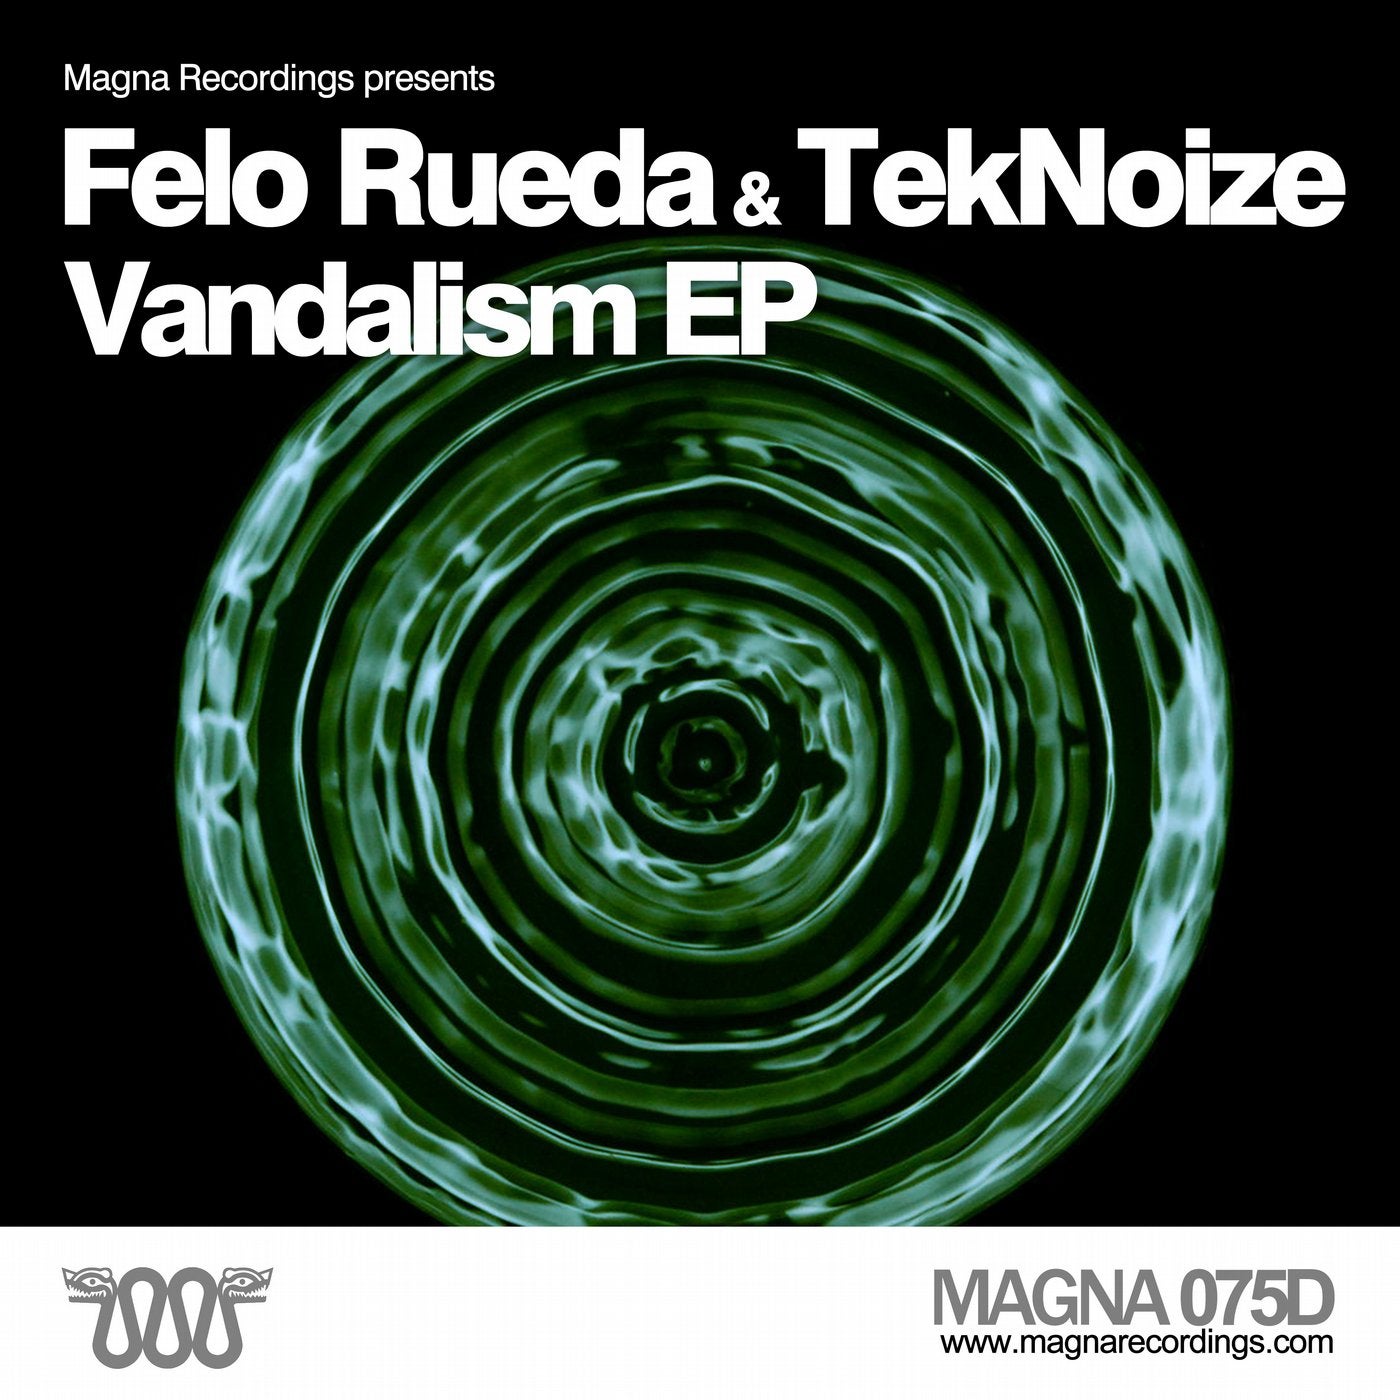 Felo Rueda & TekNoize - Vandalism EP